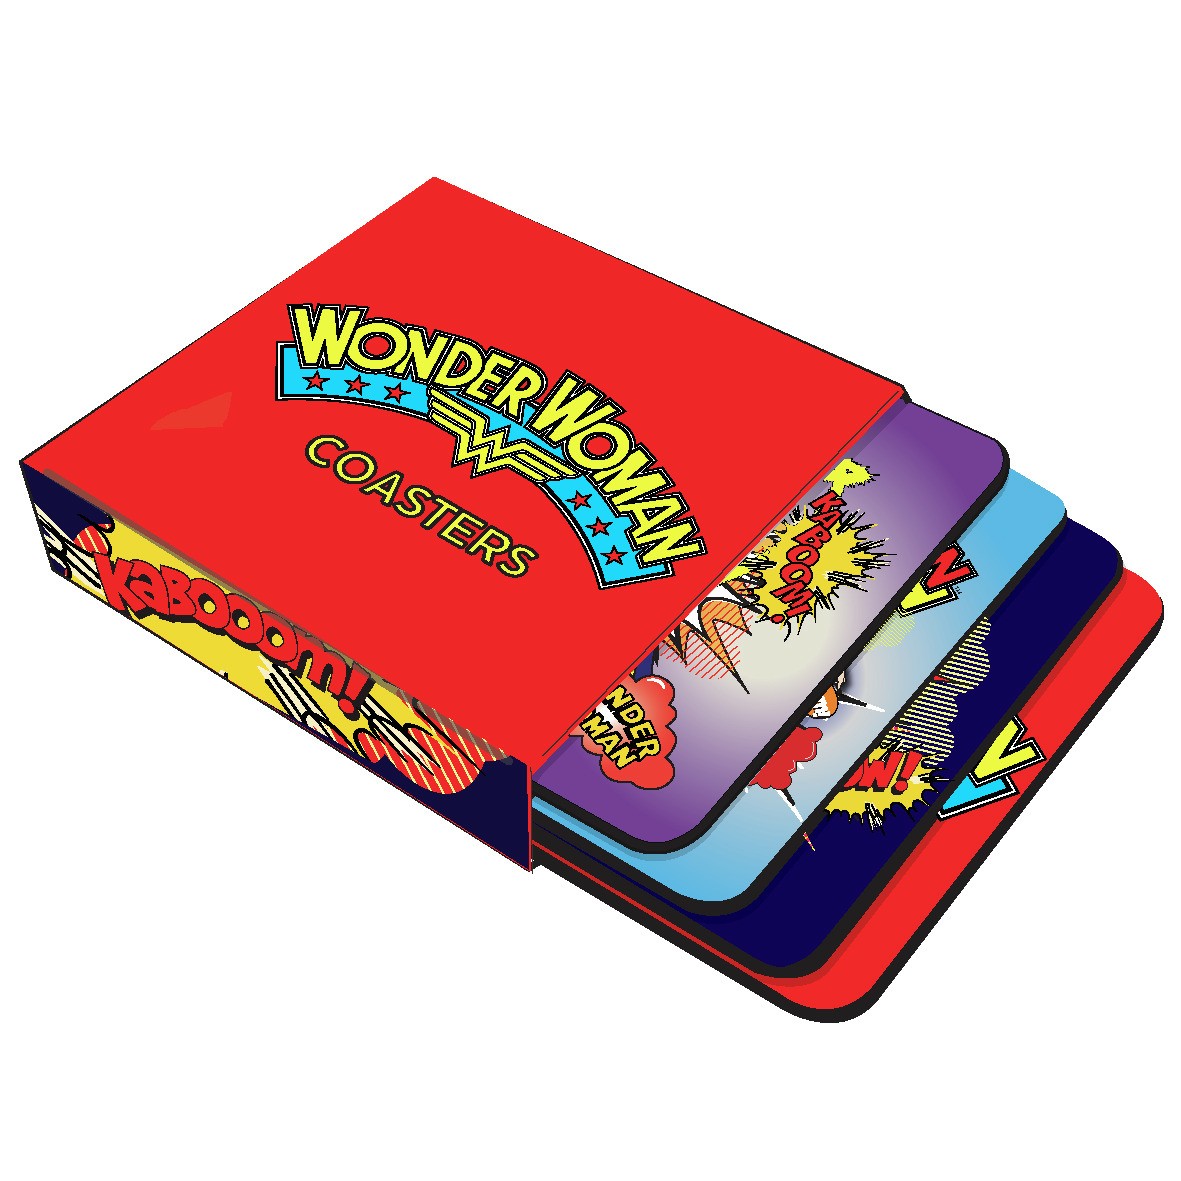 Wonder Woman "Pow" Coaster Set (4 Coasters) Buy Online